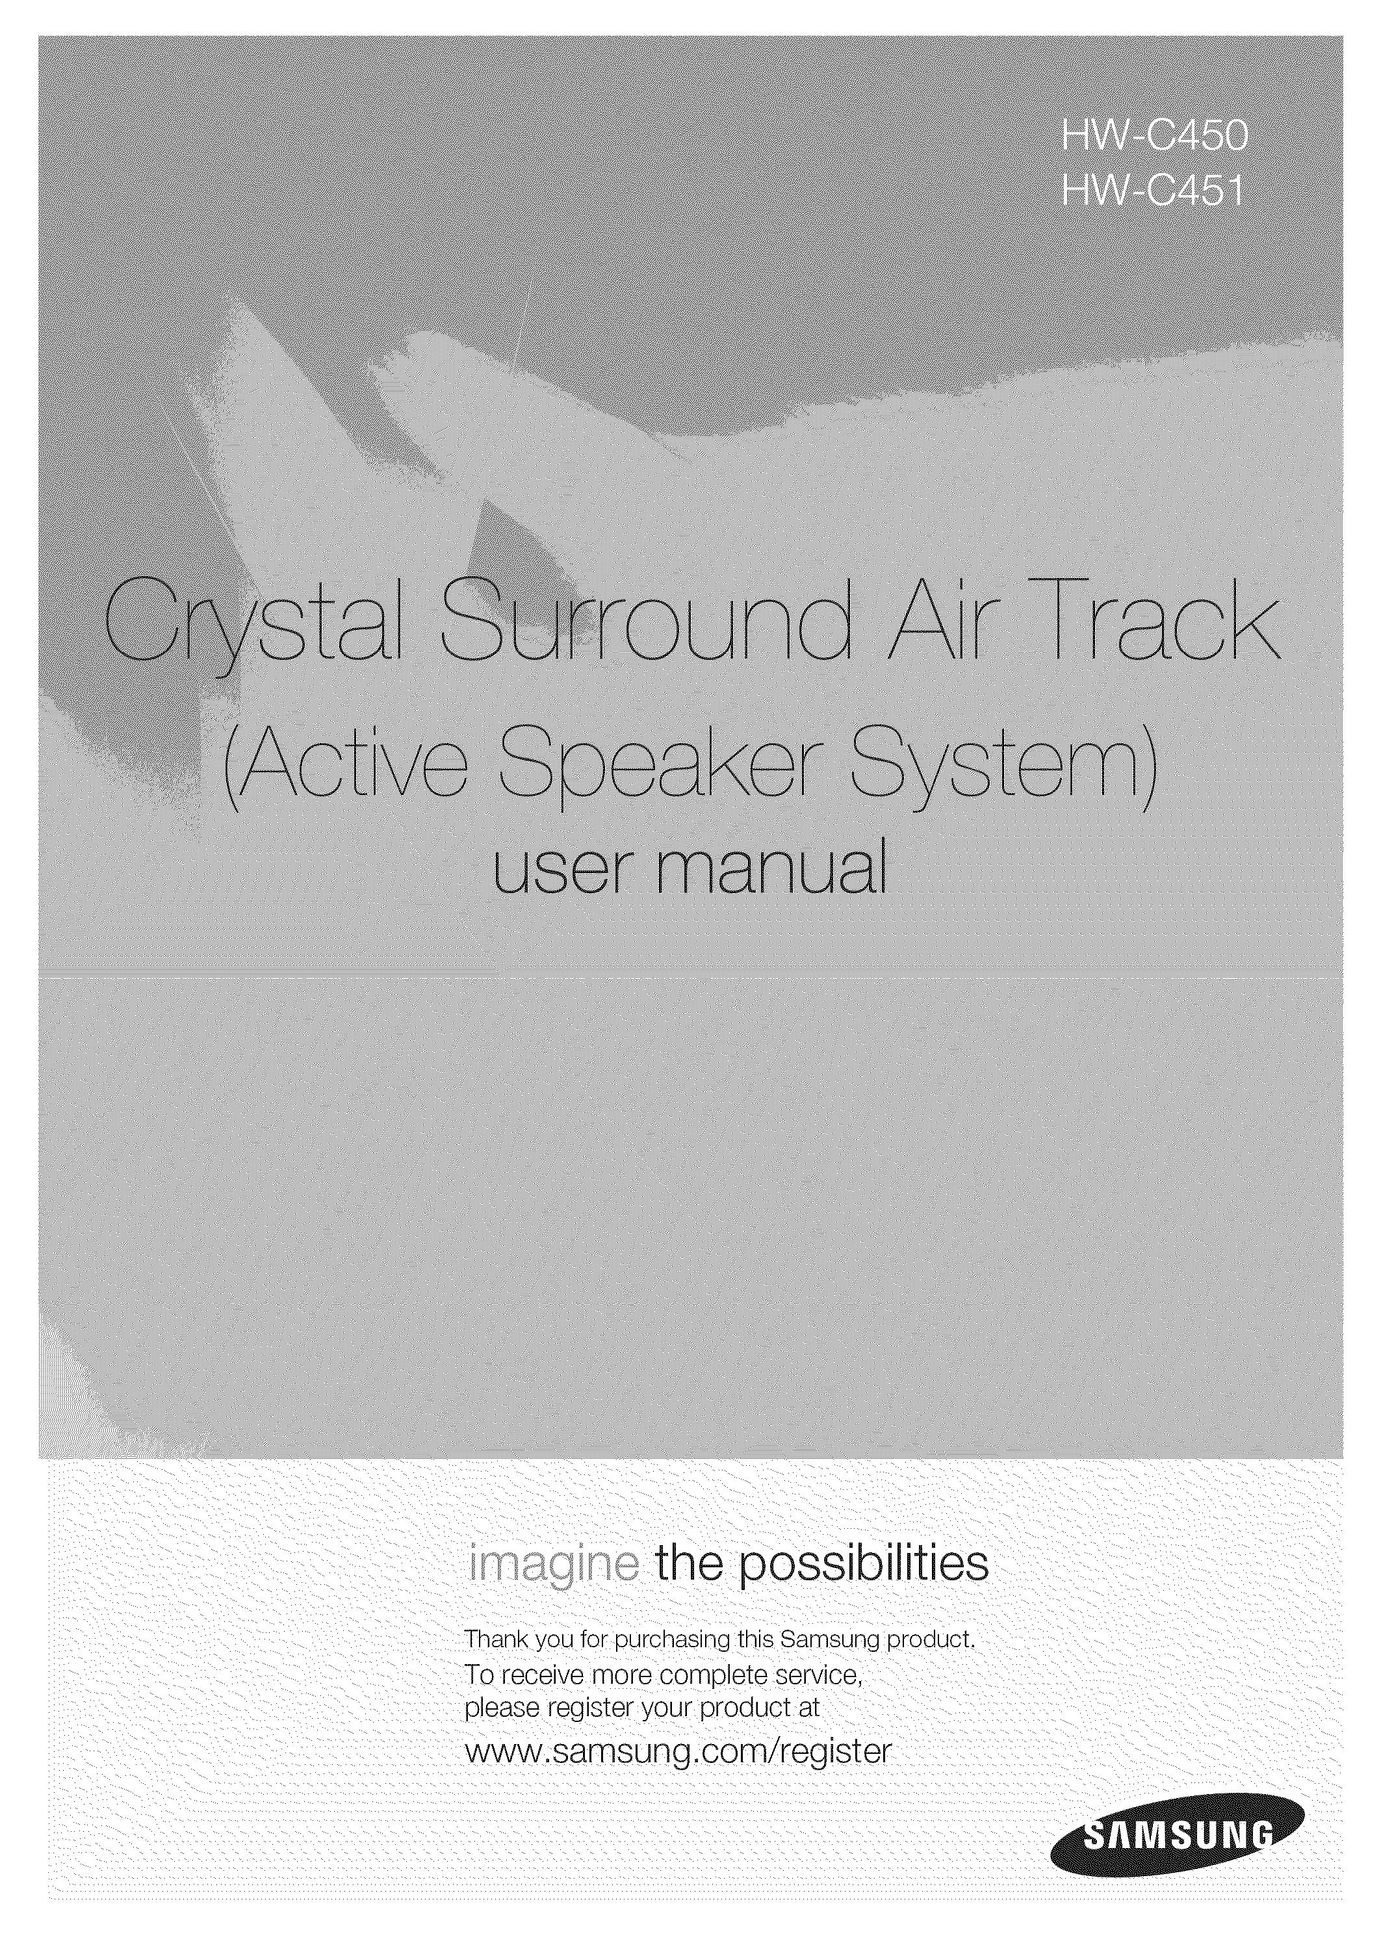 Samsung HW-C451 Speaker User Manual